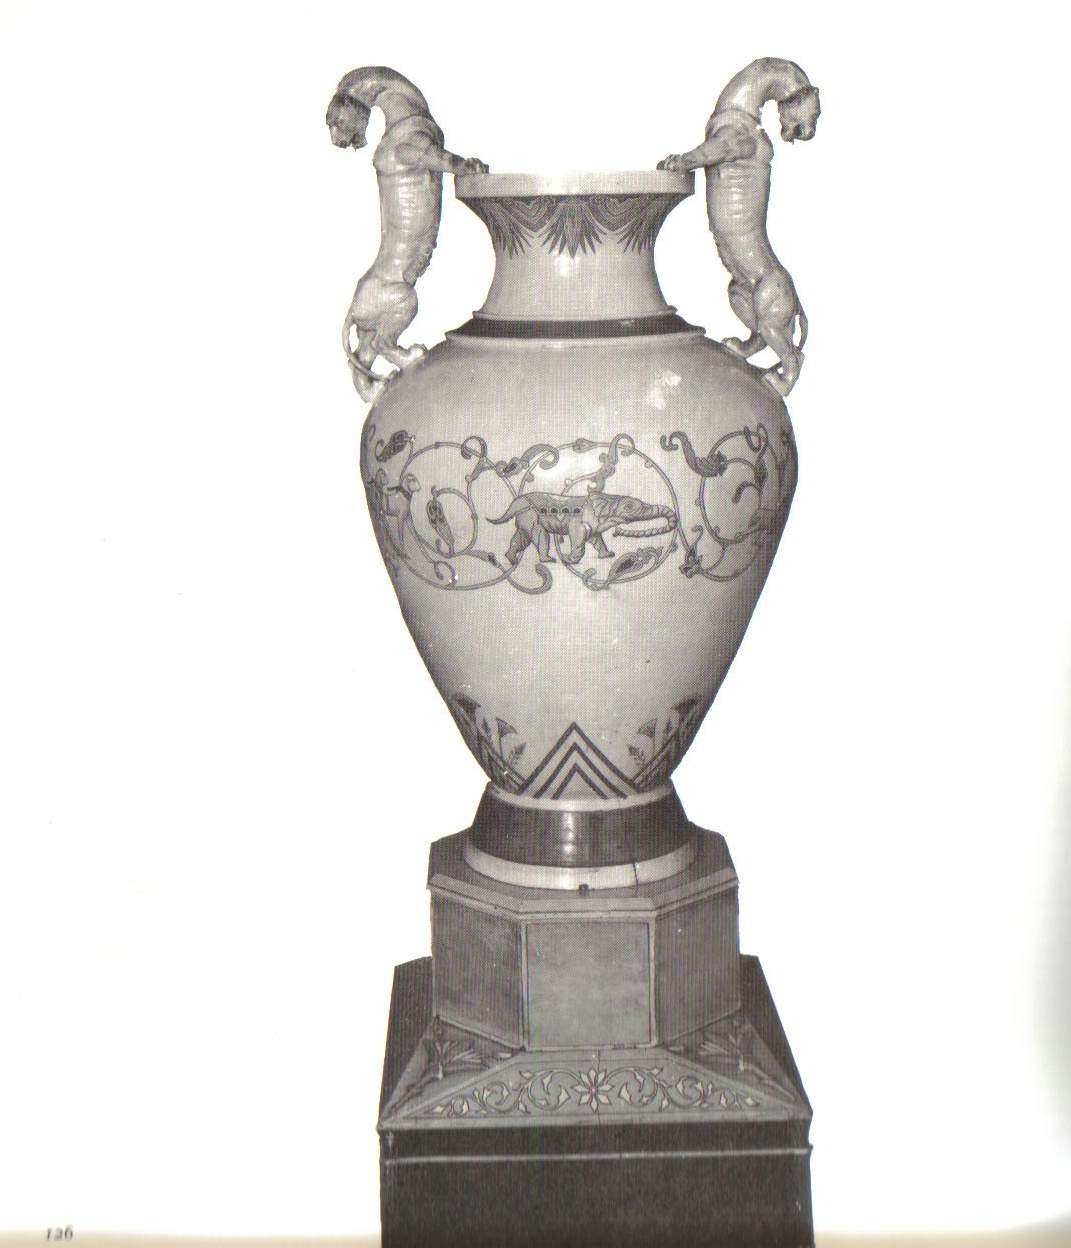 Monumental Collinot Vase